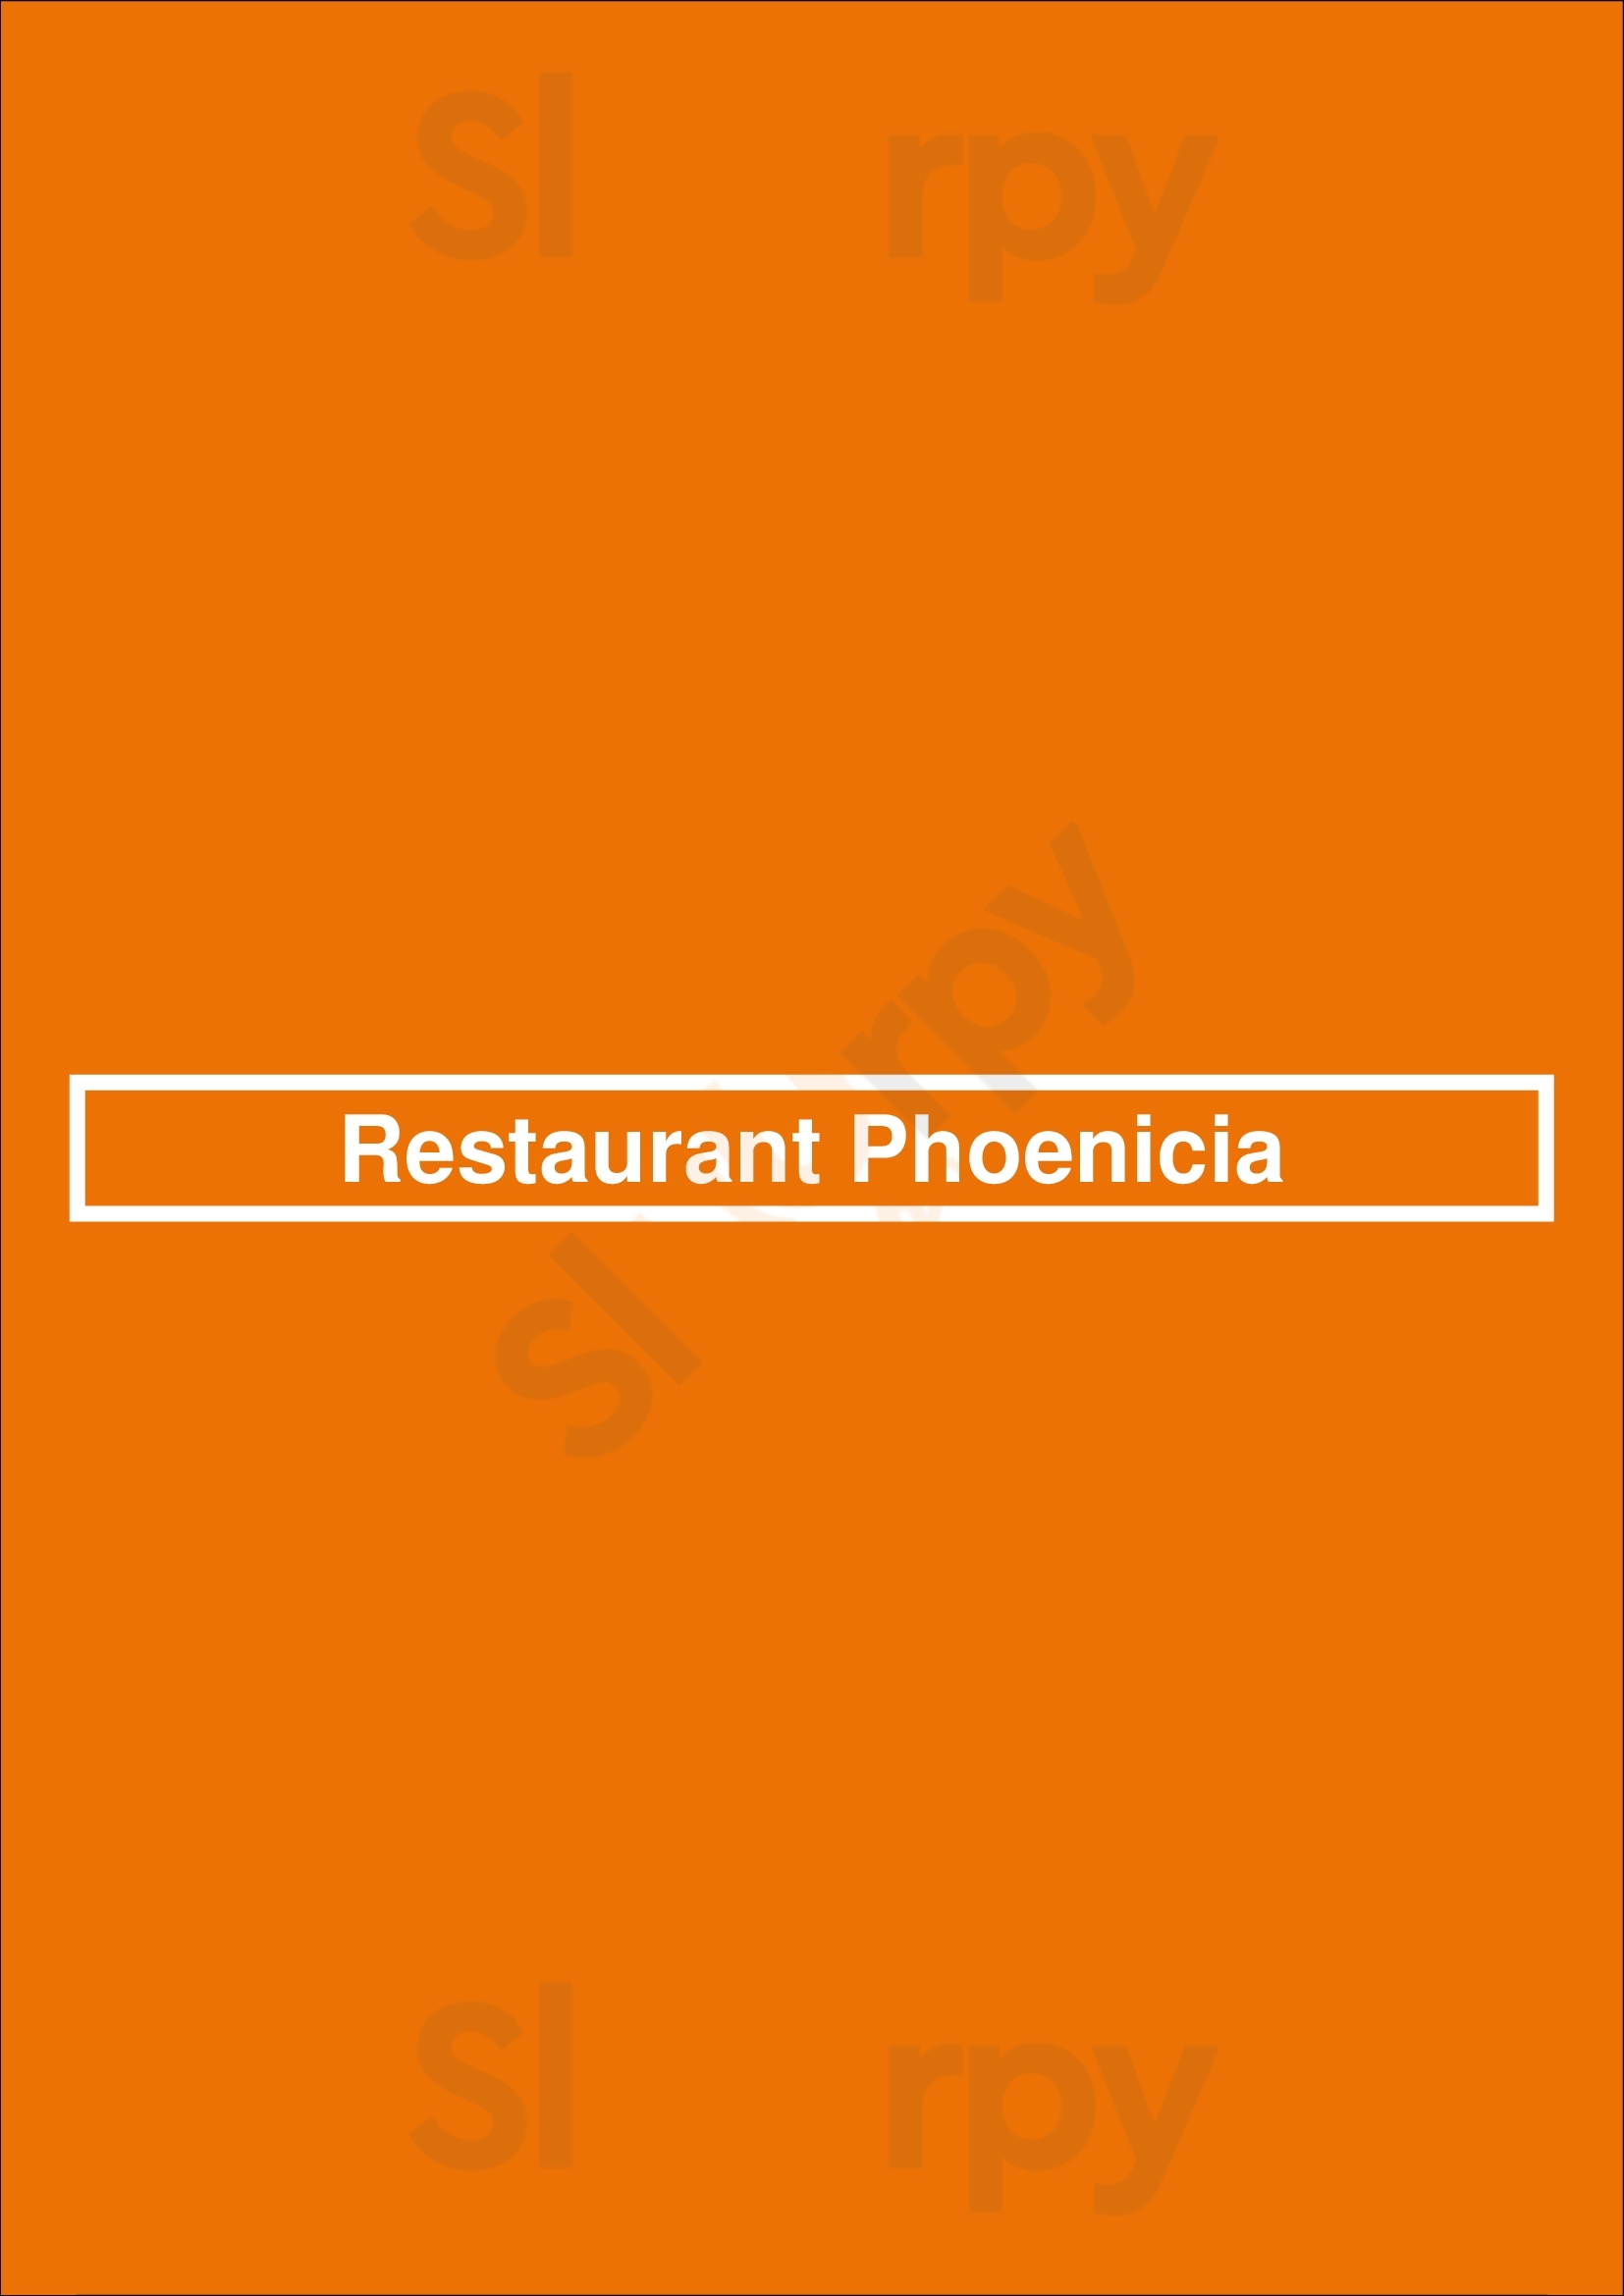 Restaurant Phoenicia Berlin Menu - 1